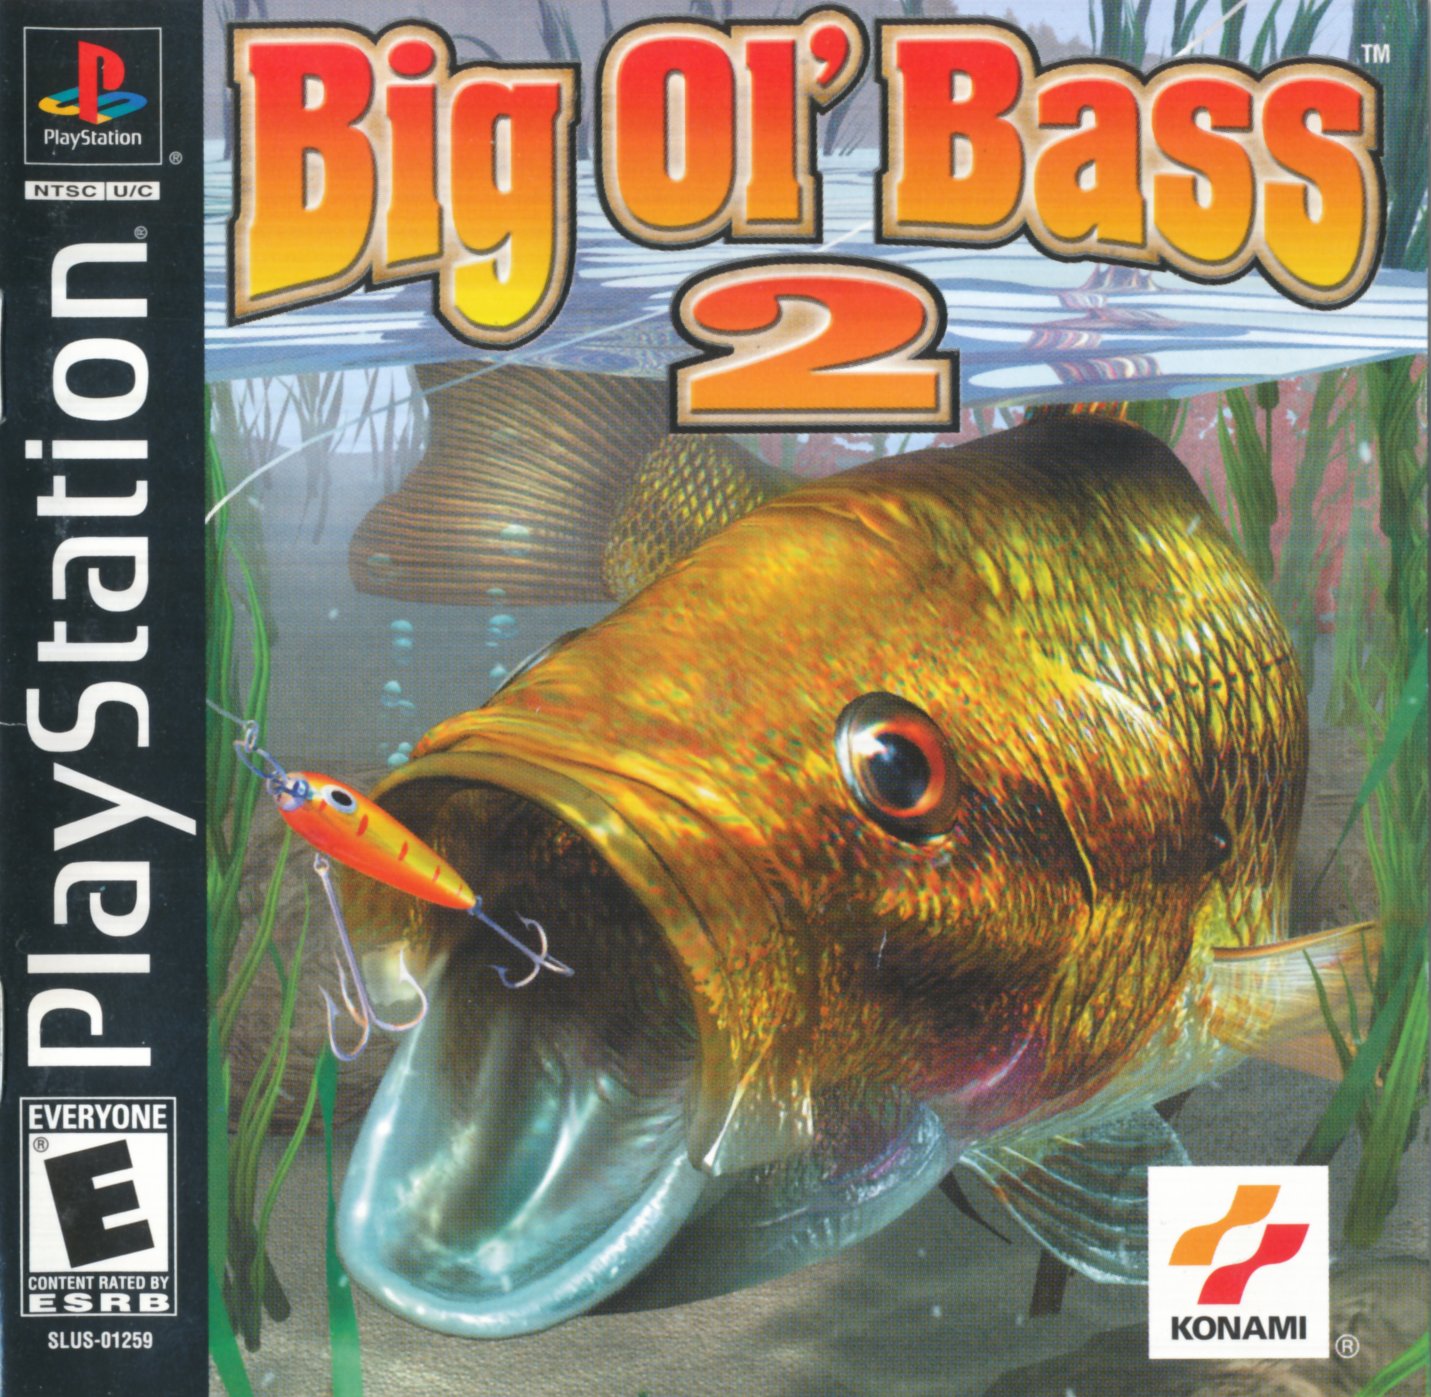 Bass games. Fisherman's Bait 2: big ol' Bass. Fisherman's Bait 2 big ol Bass ps1 обложка. Big ol Bass 2 ps1. Fisherman's Bait - big ol' Bass 2 USA.